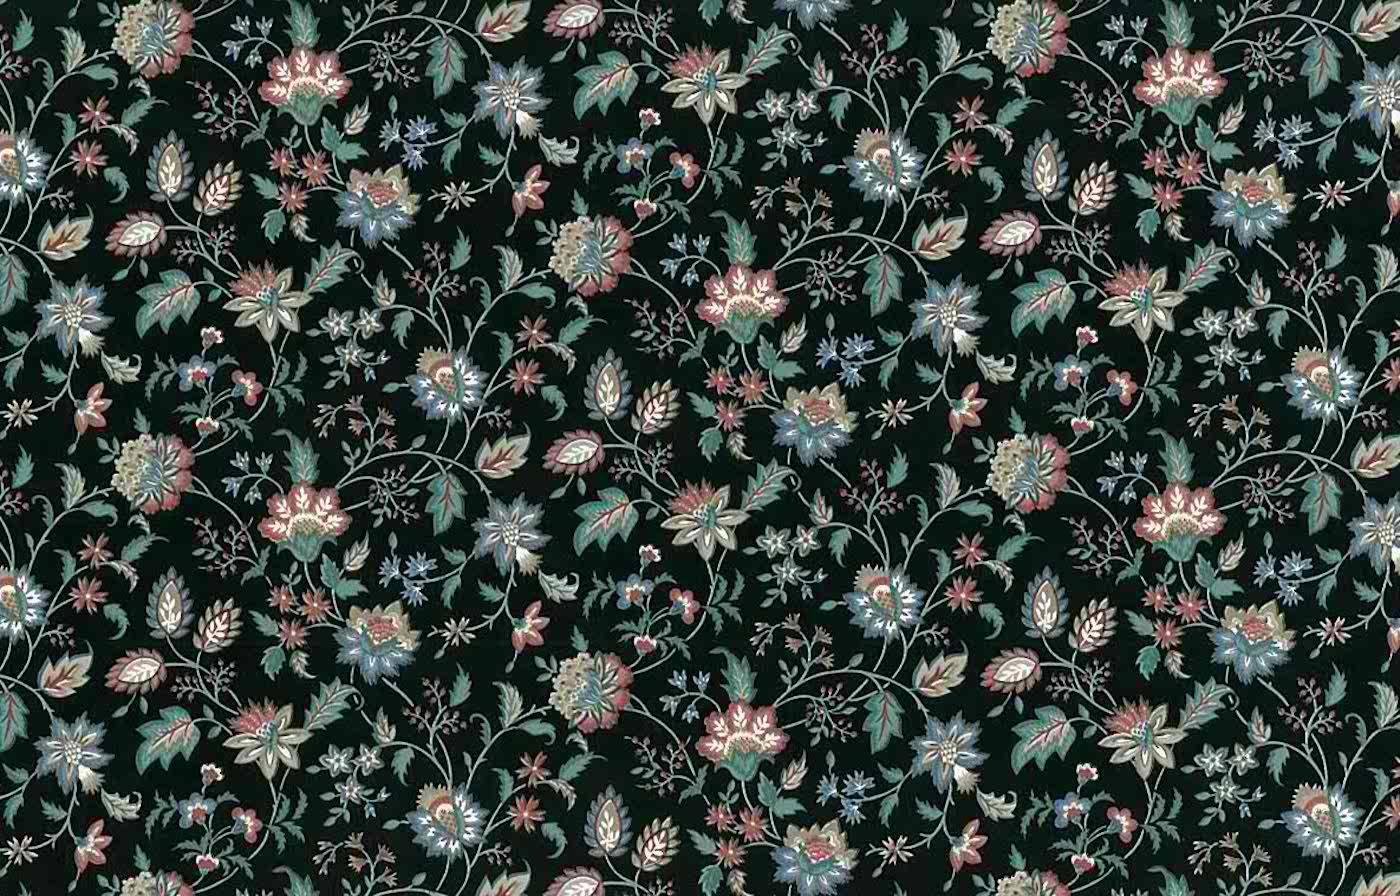 Floral Wallpaper Black Vintage - 1400x896 Wallpaper 